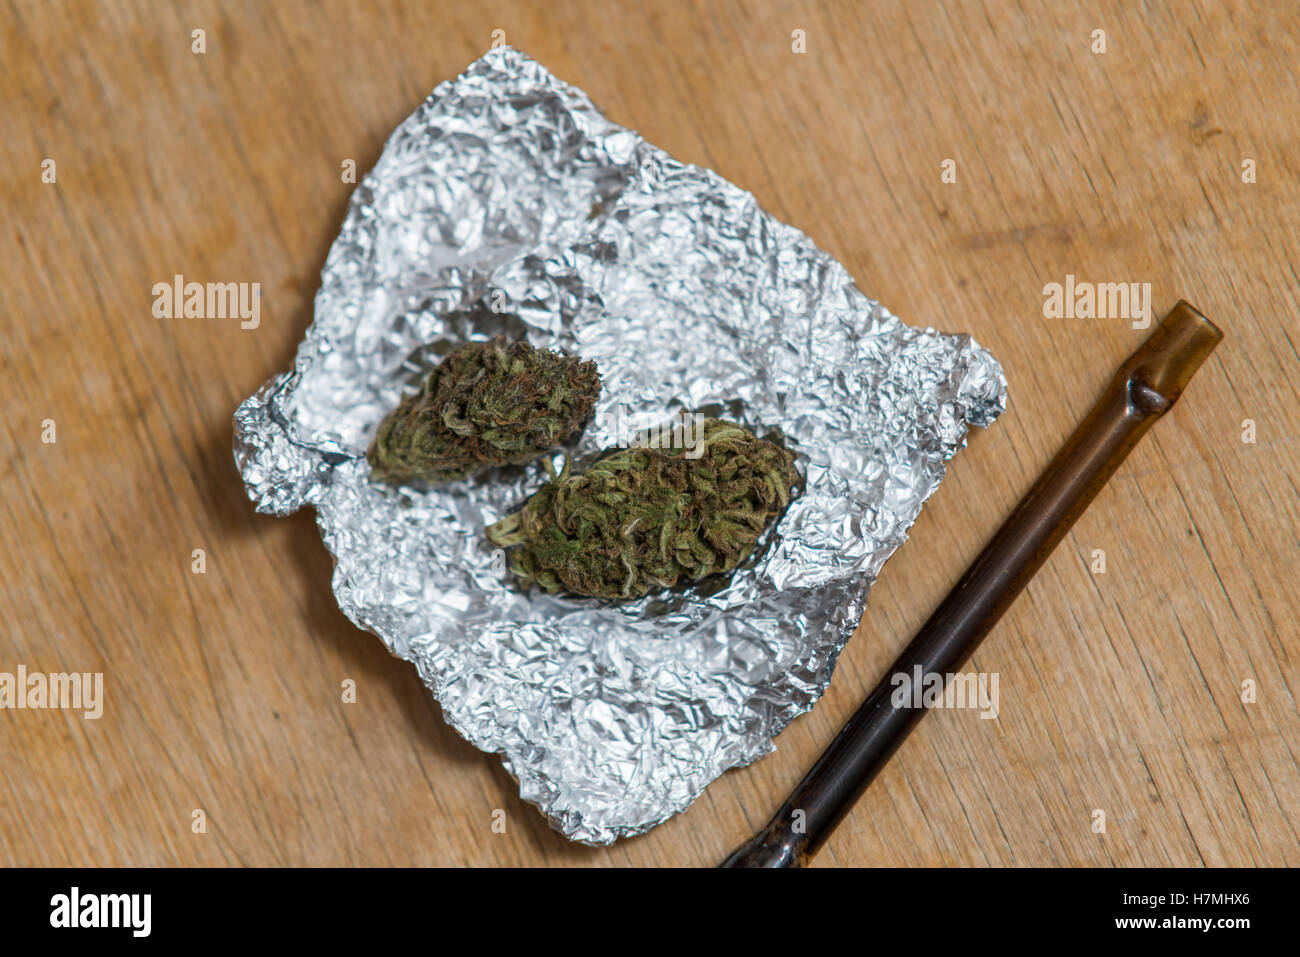 Marijuana pipe Imágenes recortadas de stock - Alamy